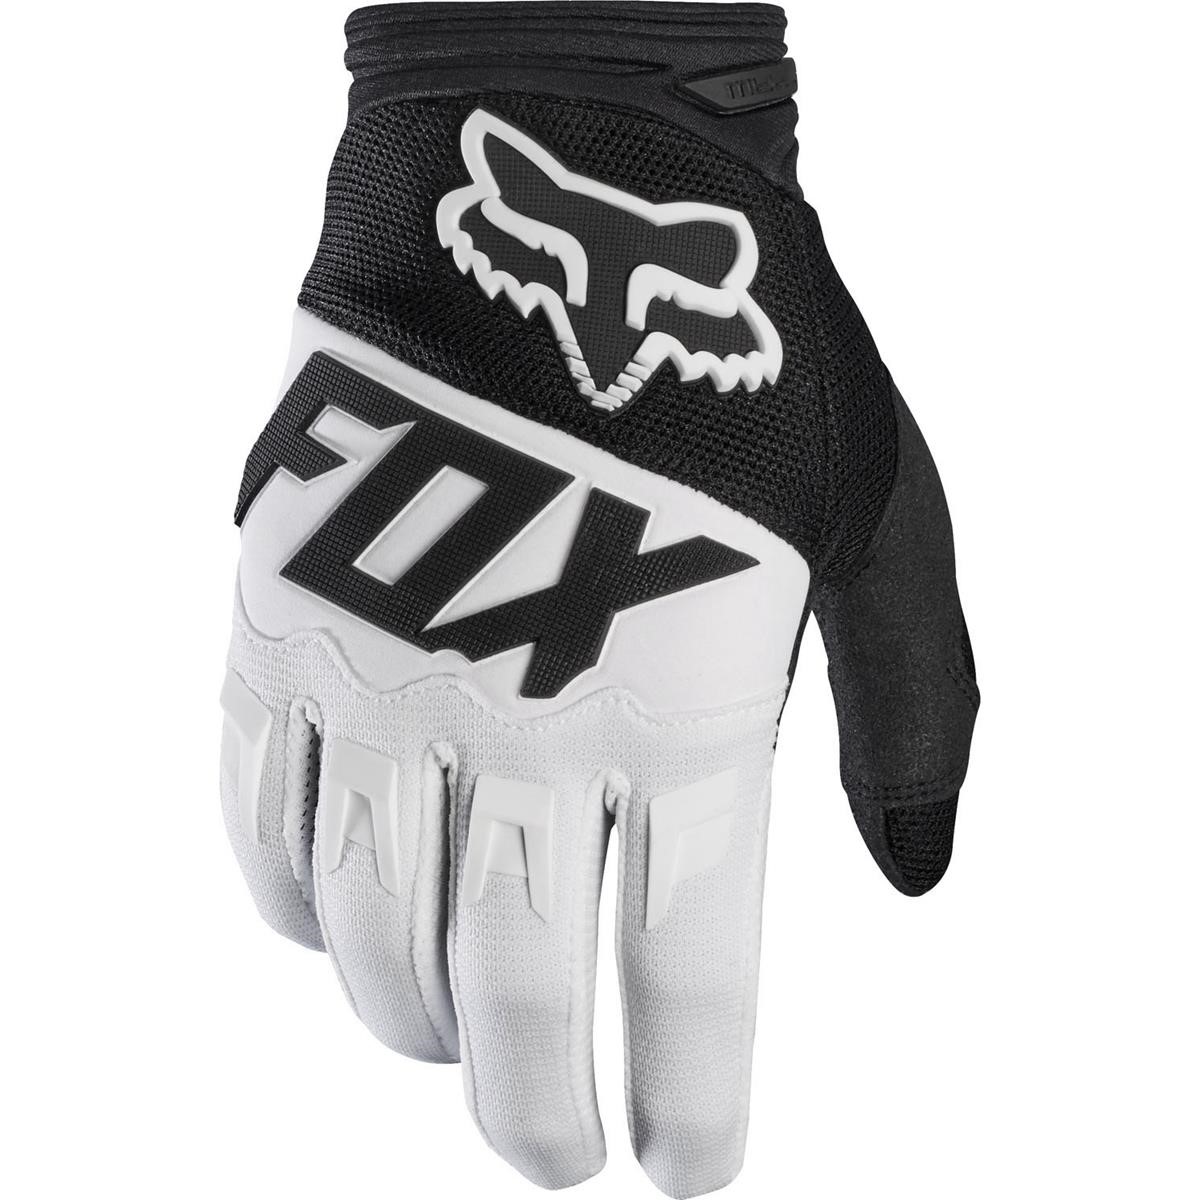 Fox Handschuhe Dirtpaw Race Schwarz/Weiß